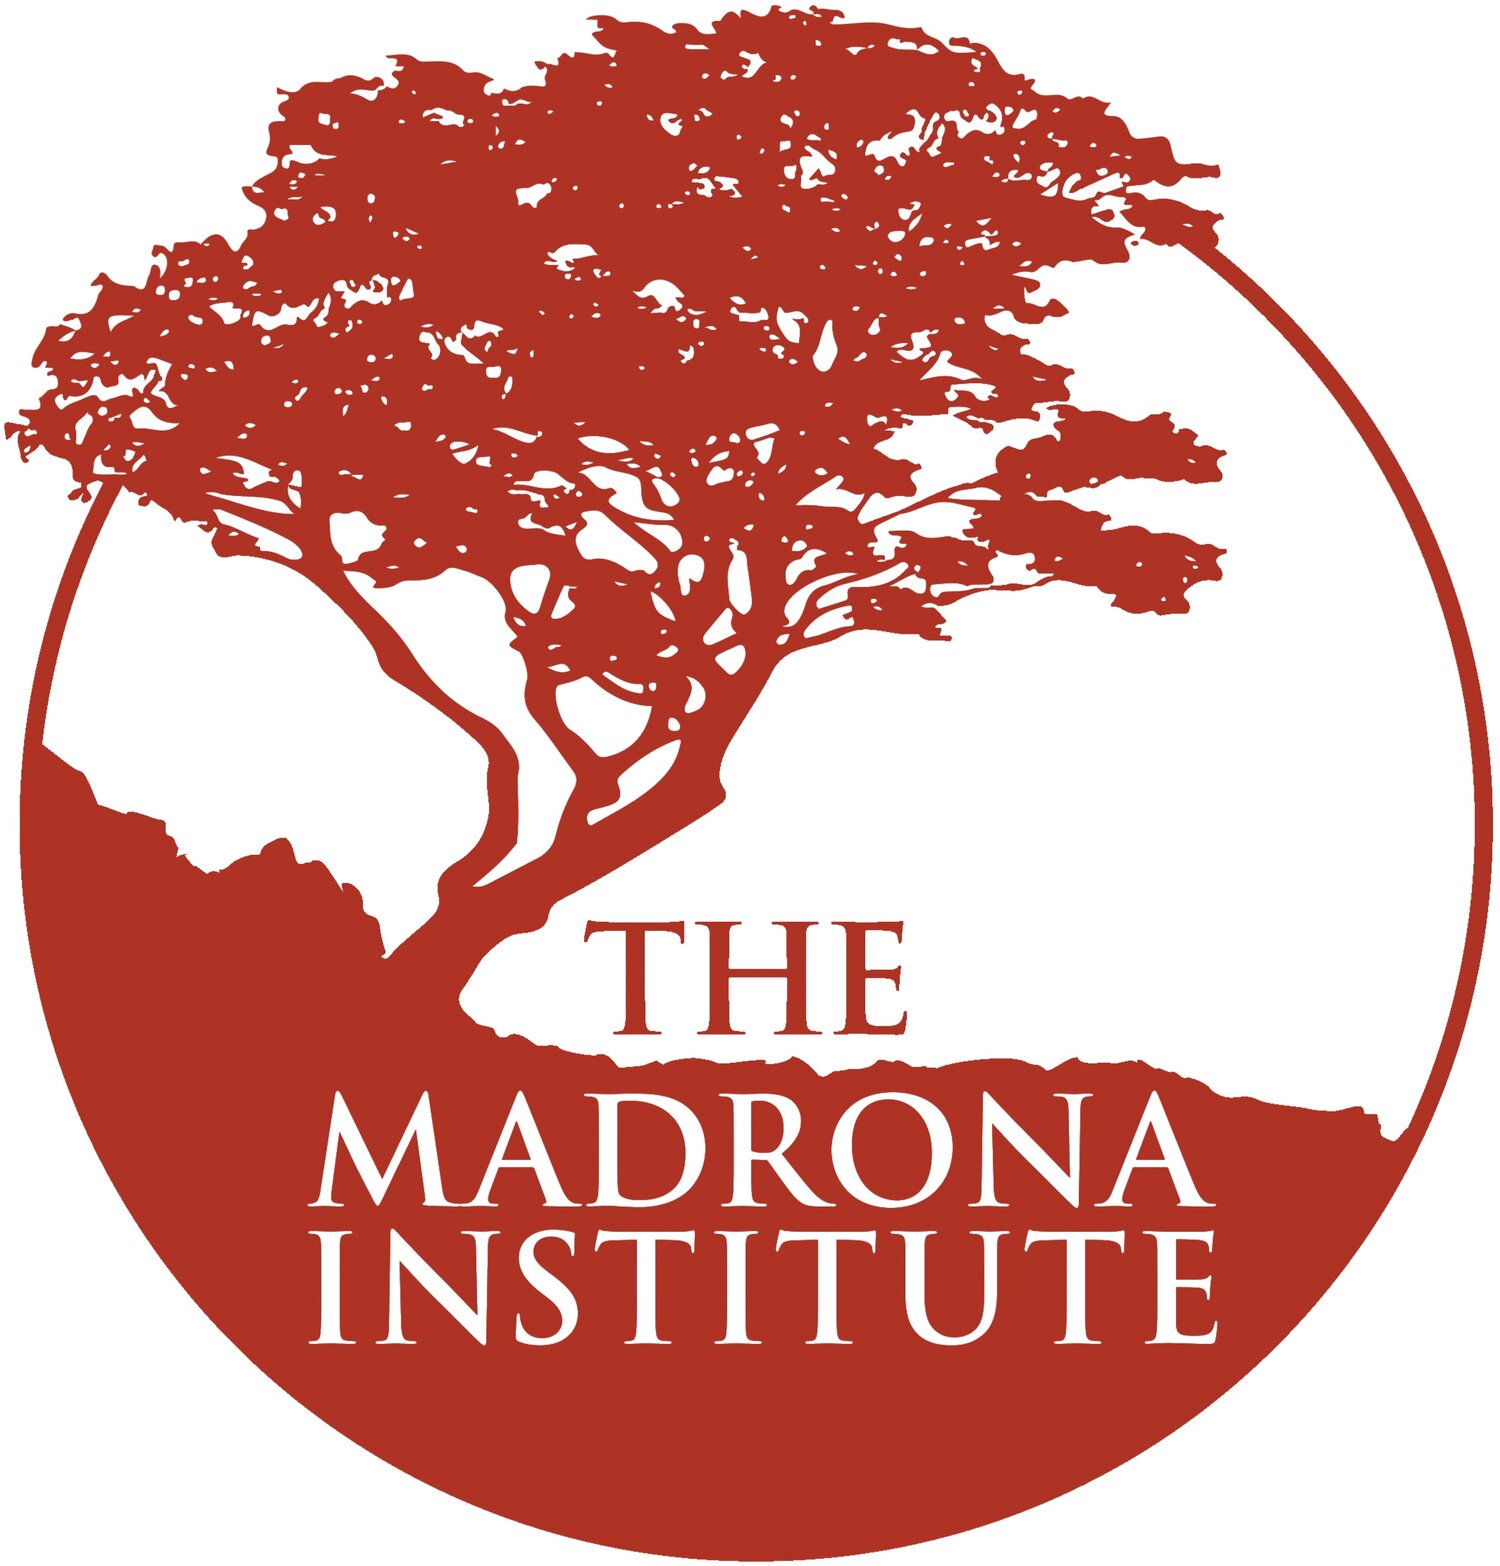 The Madrona Institute